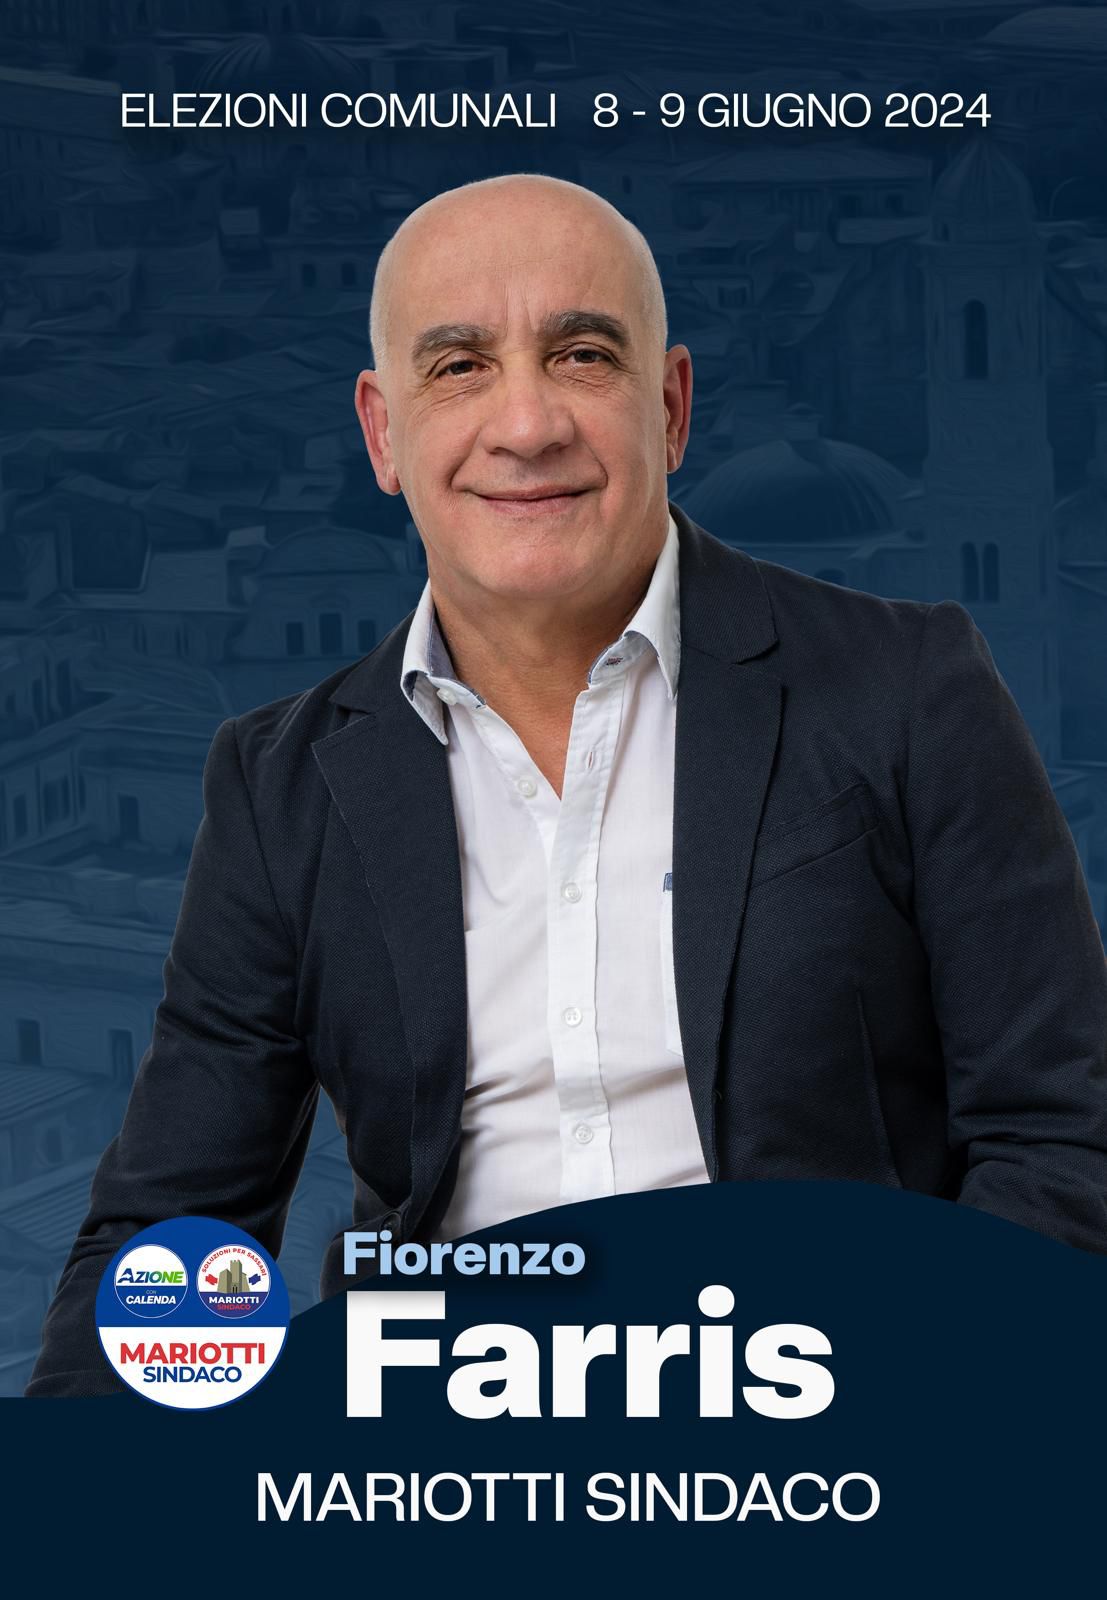 Fiorenzo Farris